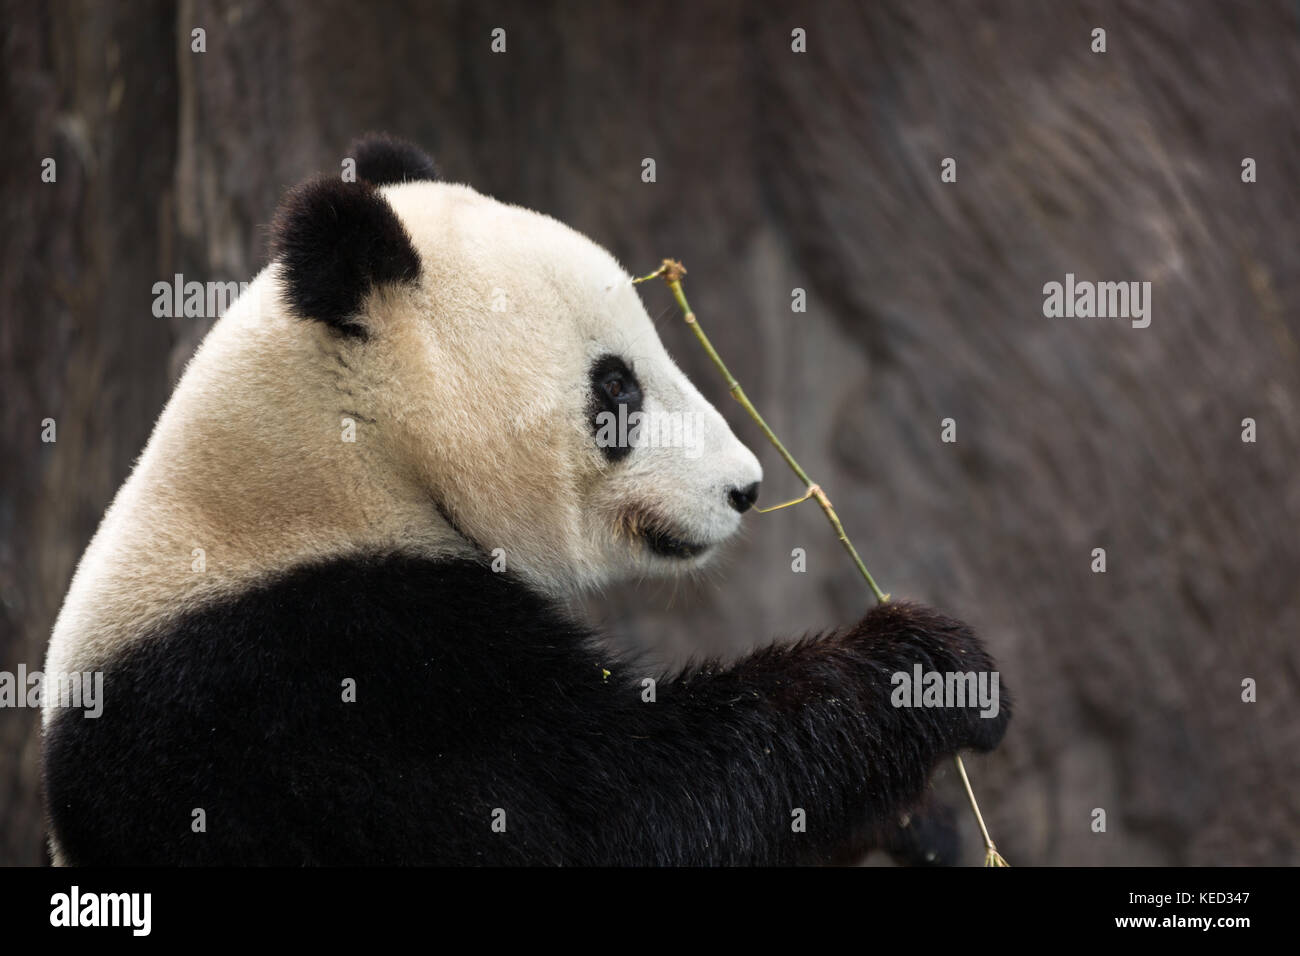 Panda Comiendo bambú aislados con fondo borroso Foto de stock